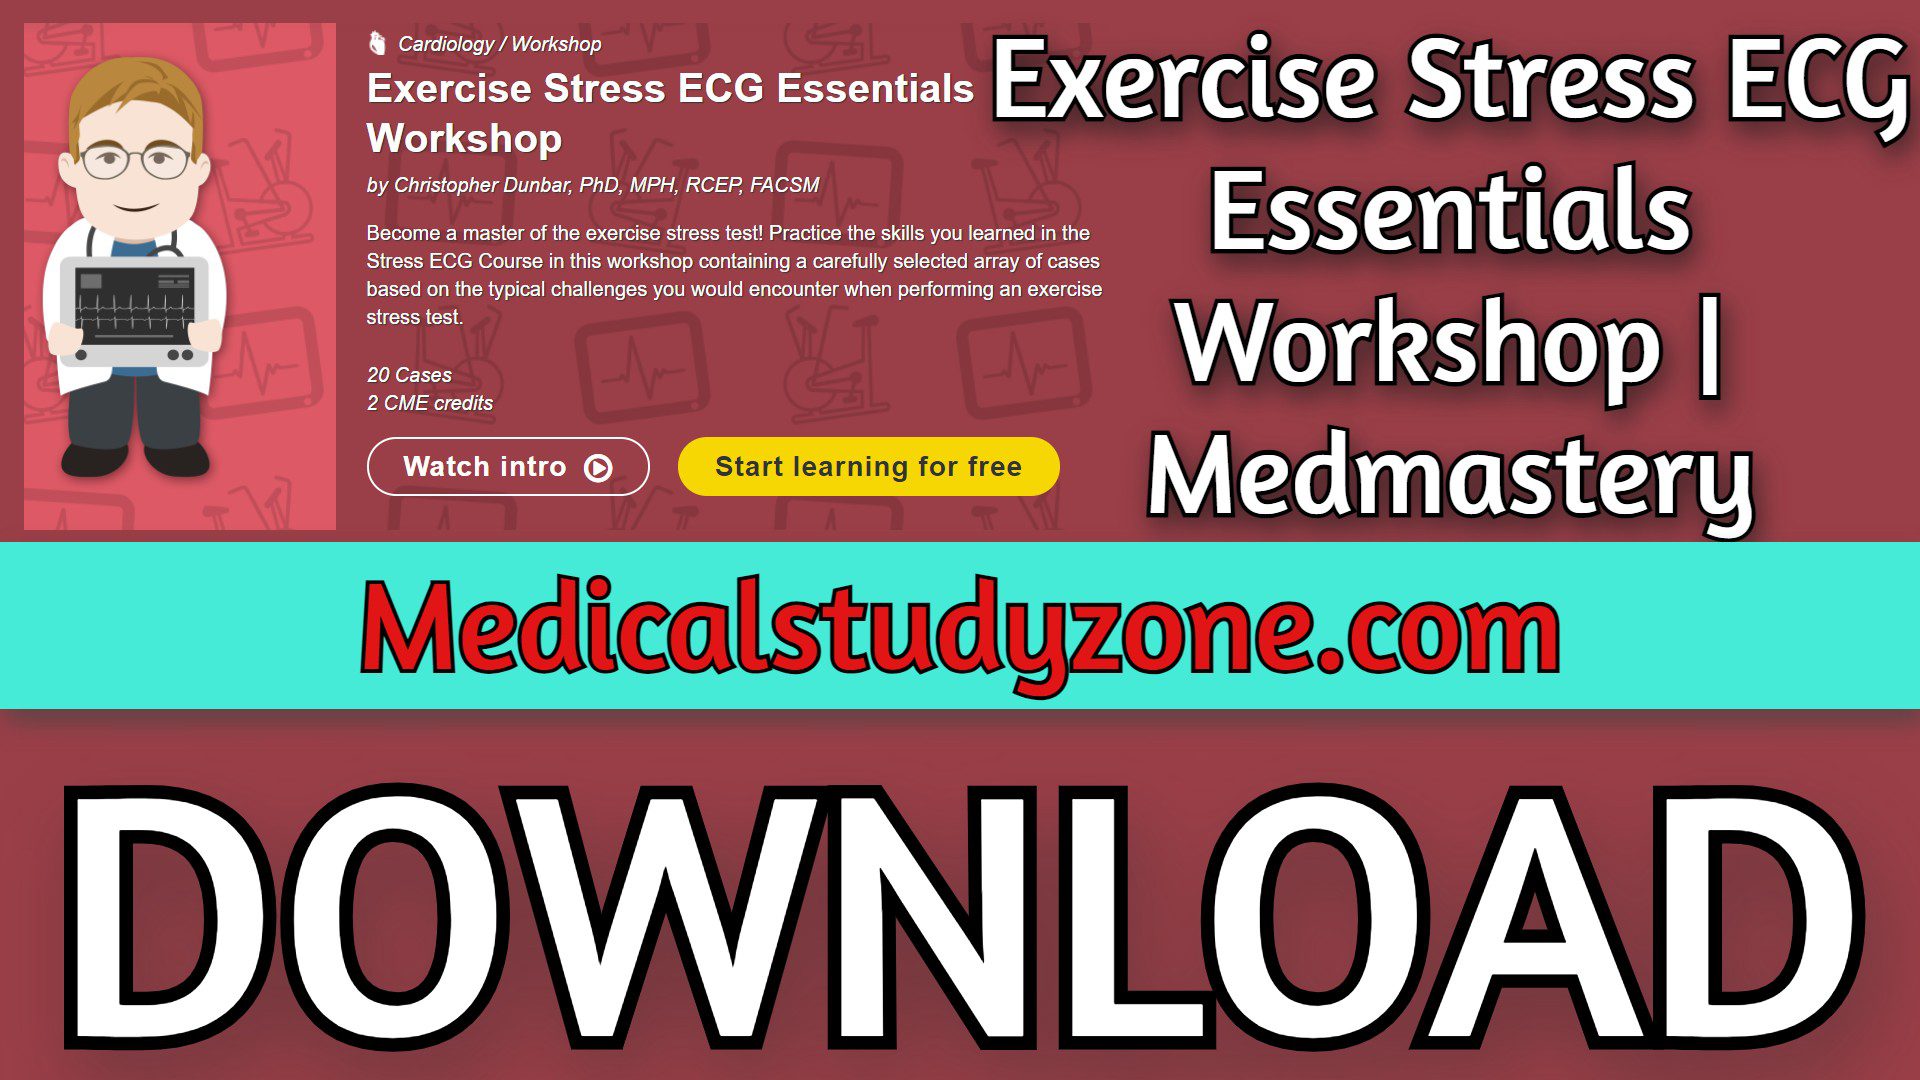 Exercise Stress ECG Essentials Workshop | Medmastery 2023 Videos Free Download